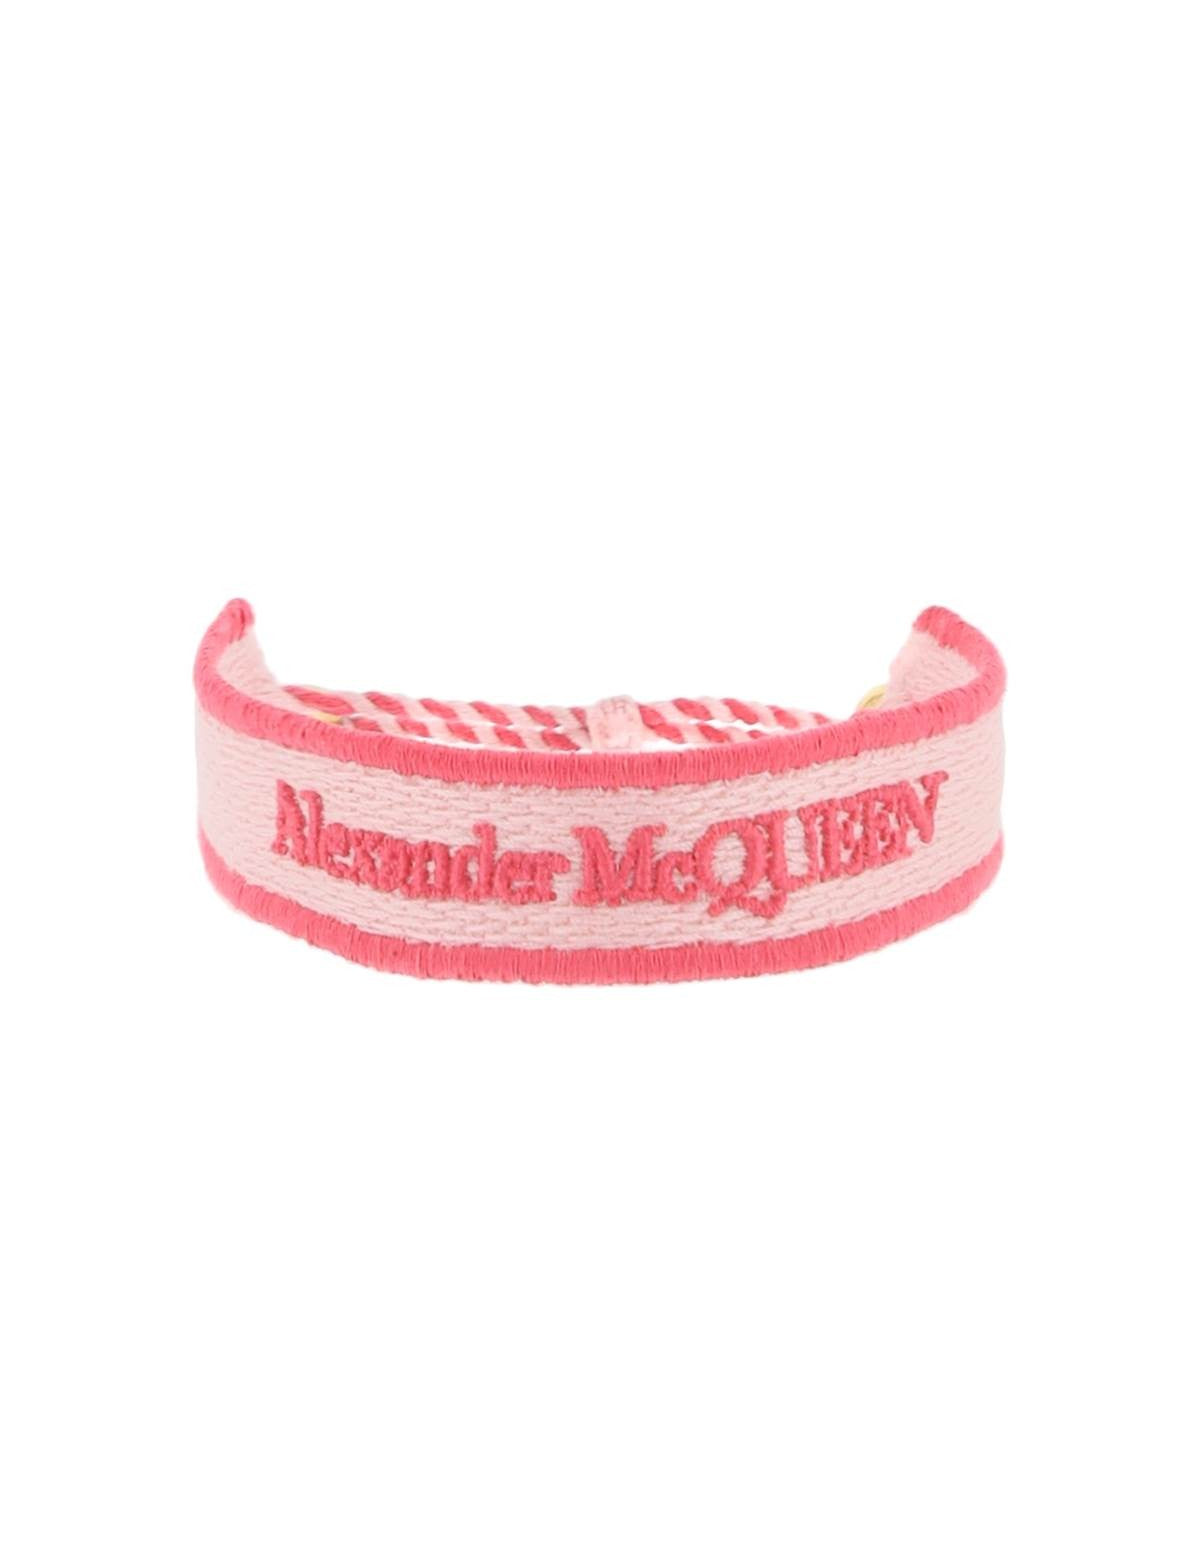 alexander-mcqueen-embroidered-bracelet_7676f491-d133-4d7f-9f30-efc390b827b7.jpg